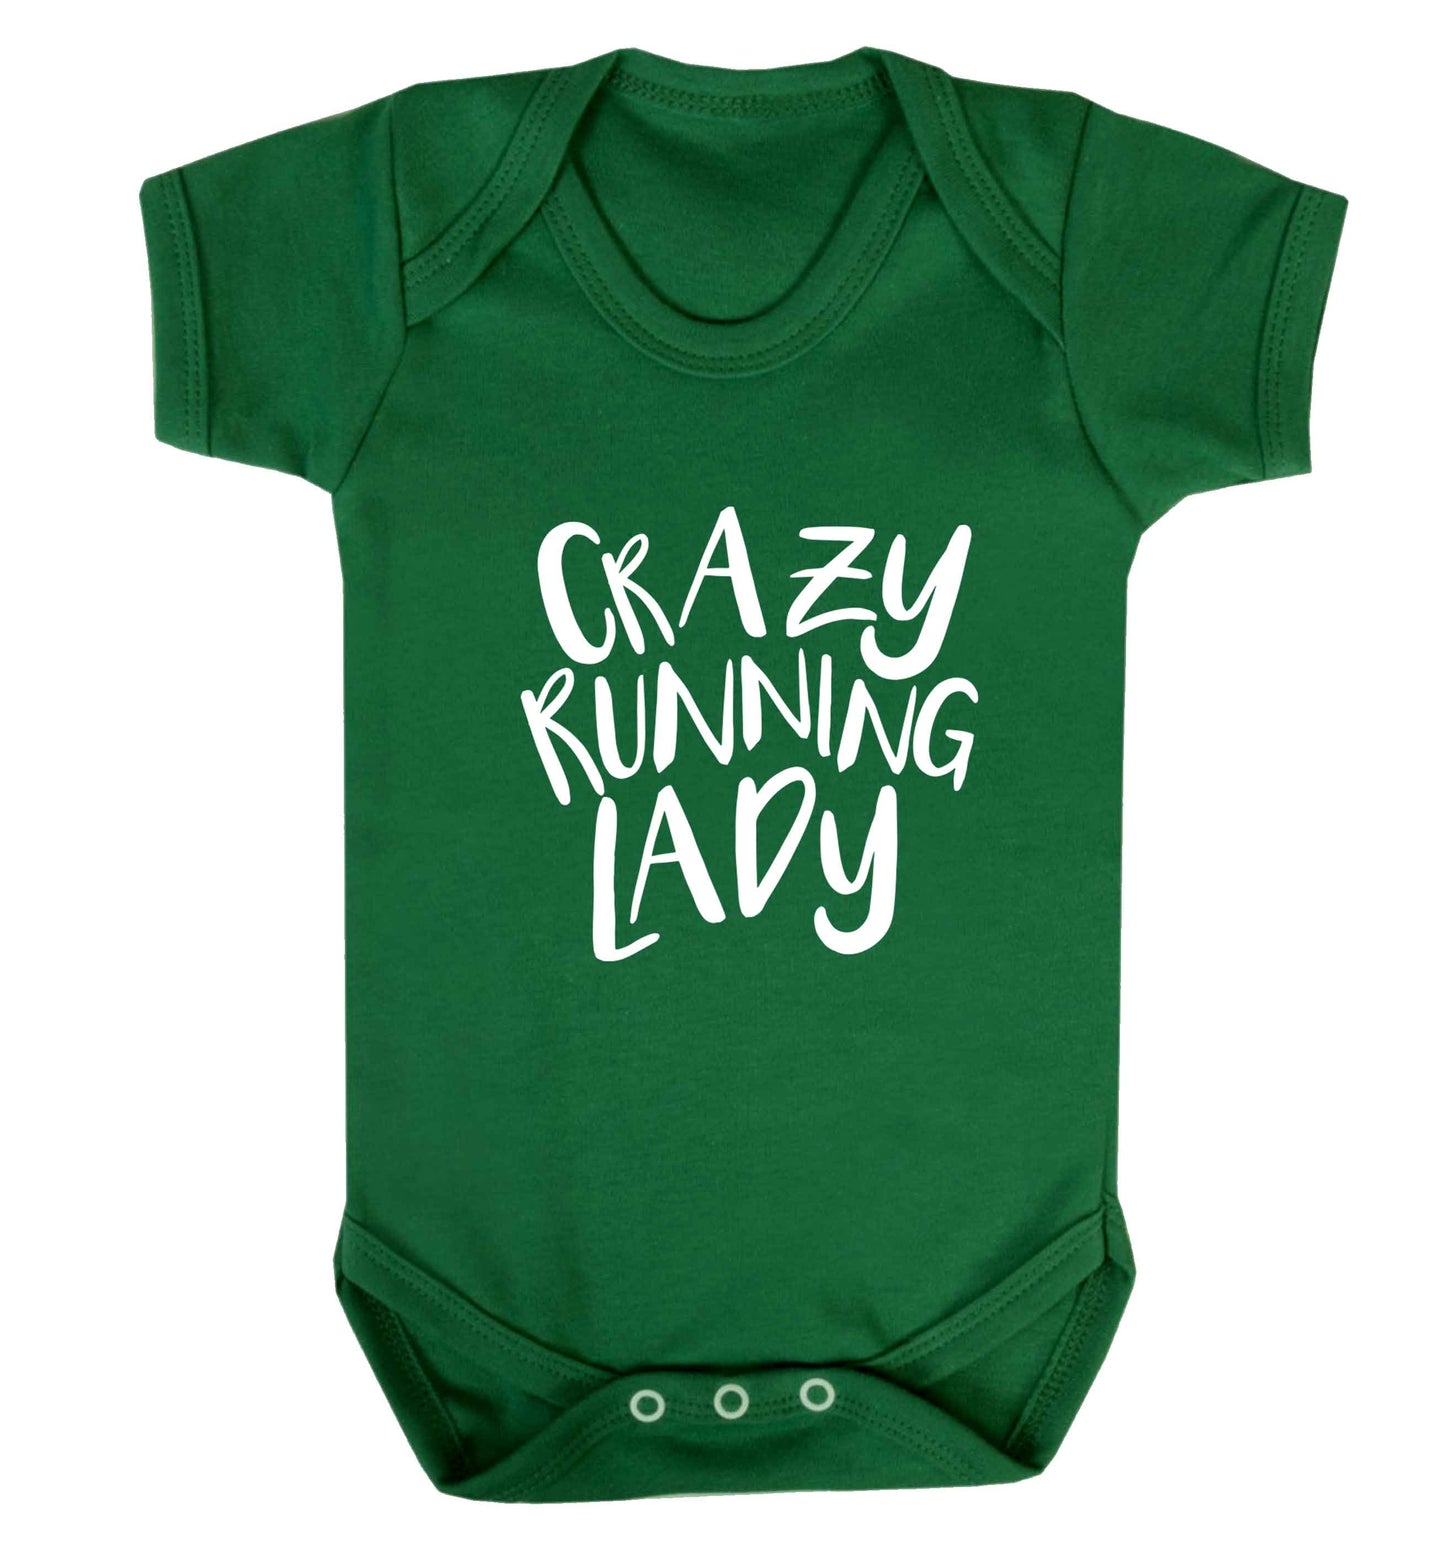 Crazy running lady baby vest green 18-24 months